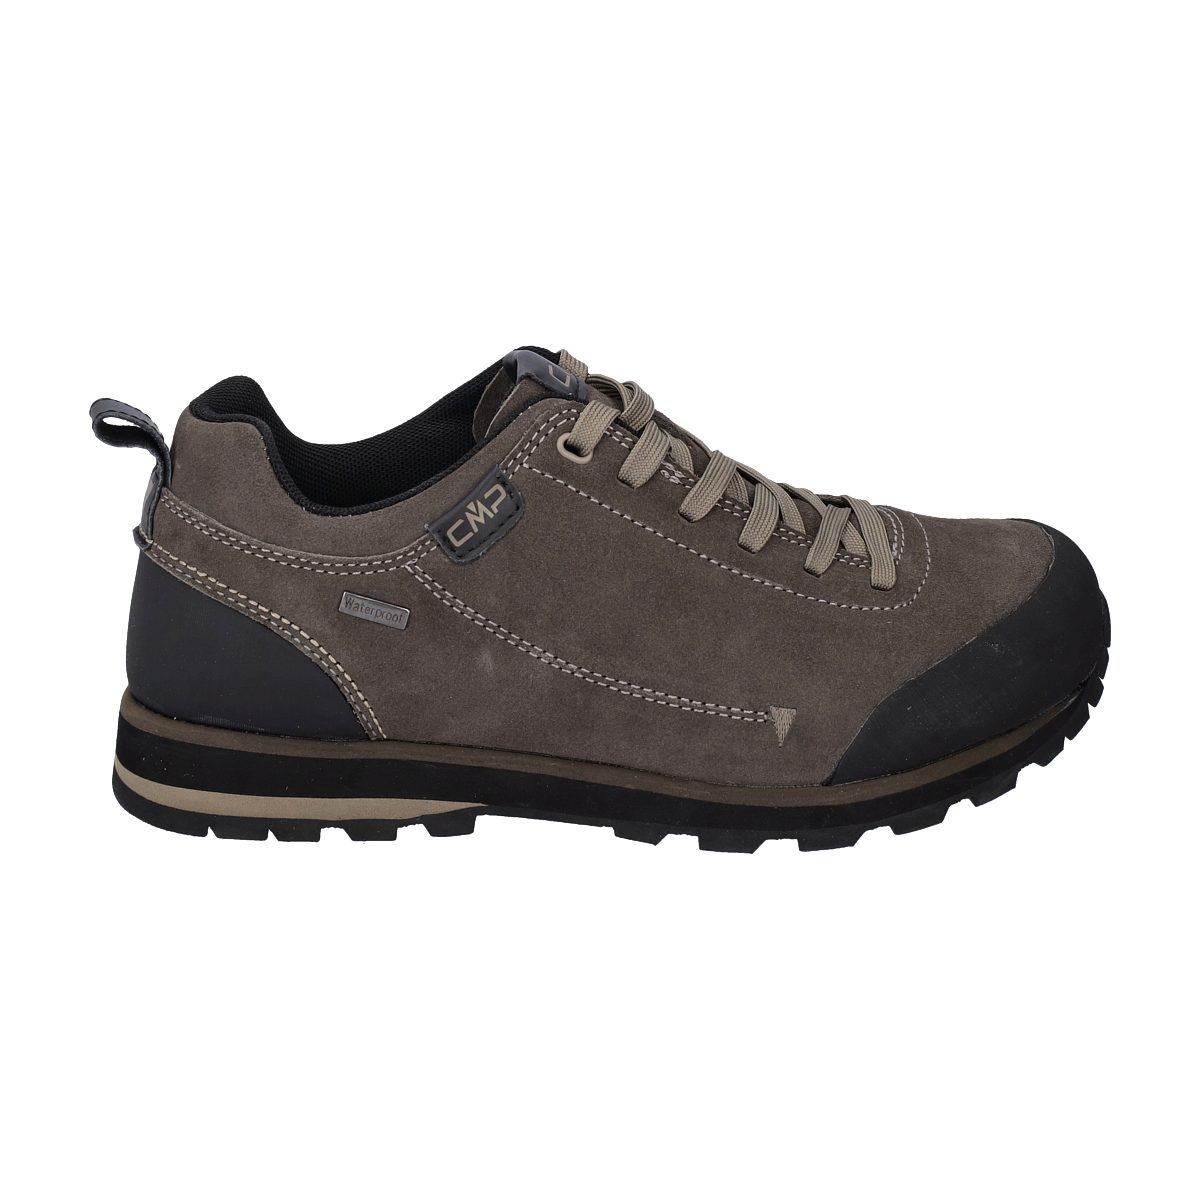 CMP Elettra Low Hiking Shoe WP Trekkingschuh mit Clima Protect® Membran und Ortholite® Foam Innensohle